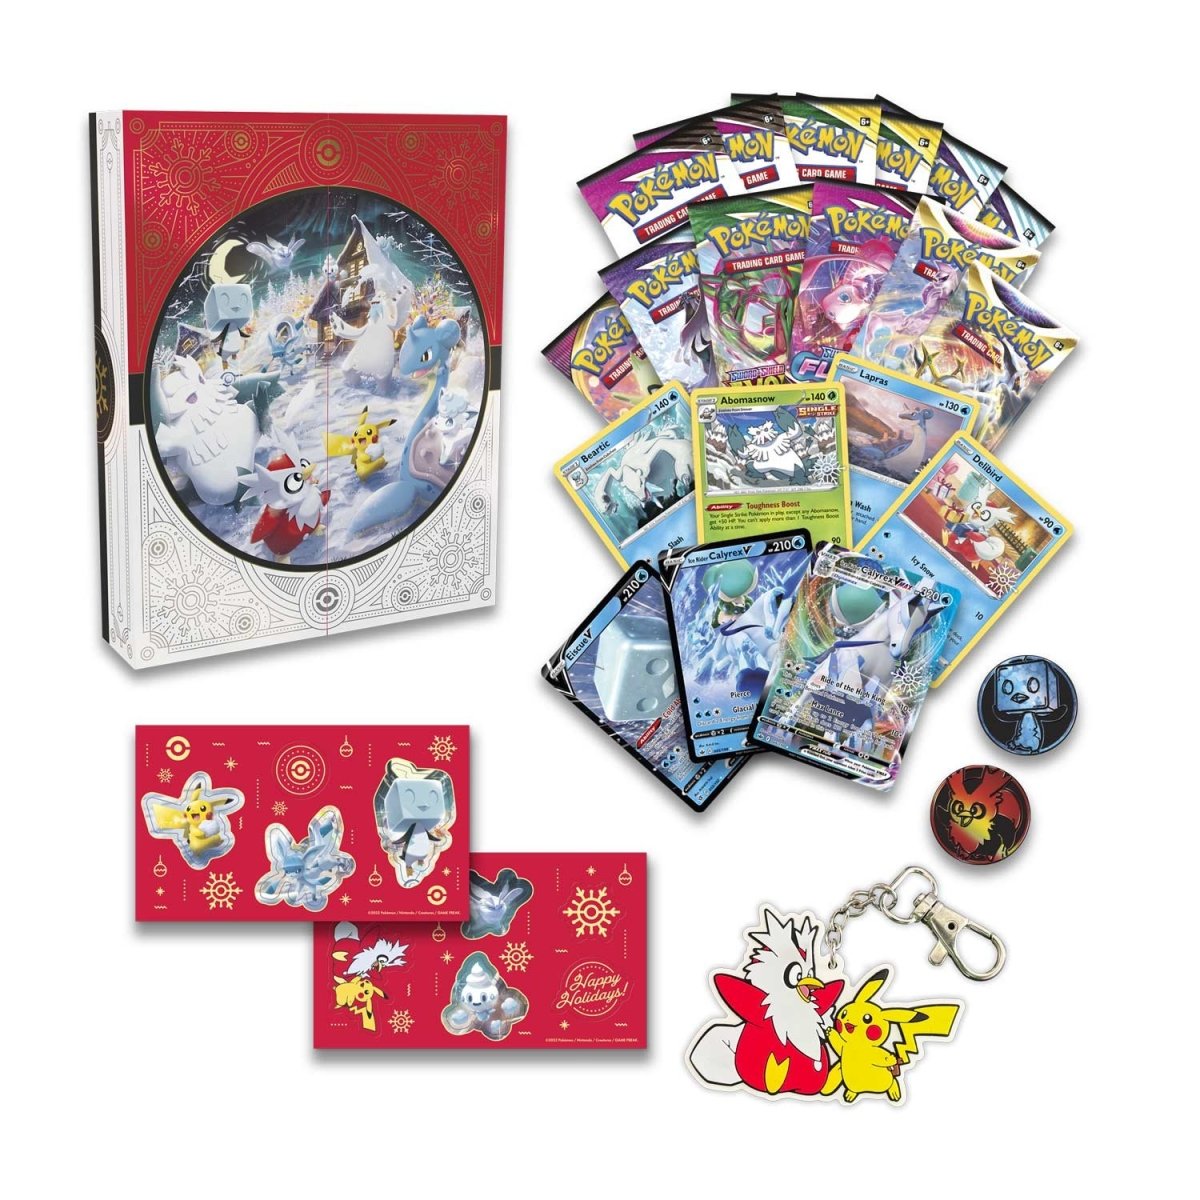 Pokémon TCG Holiday Calendar Officially Revealed! Beand New Type